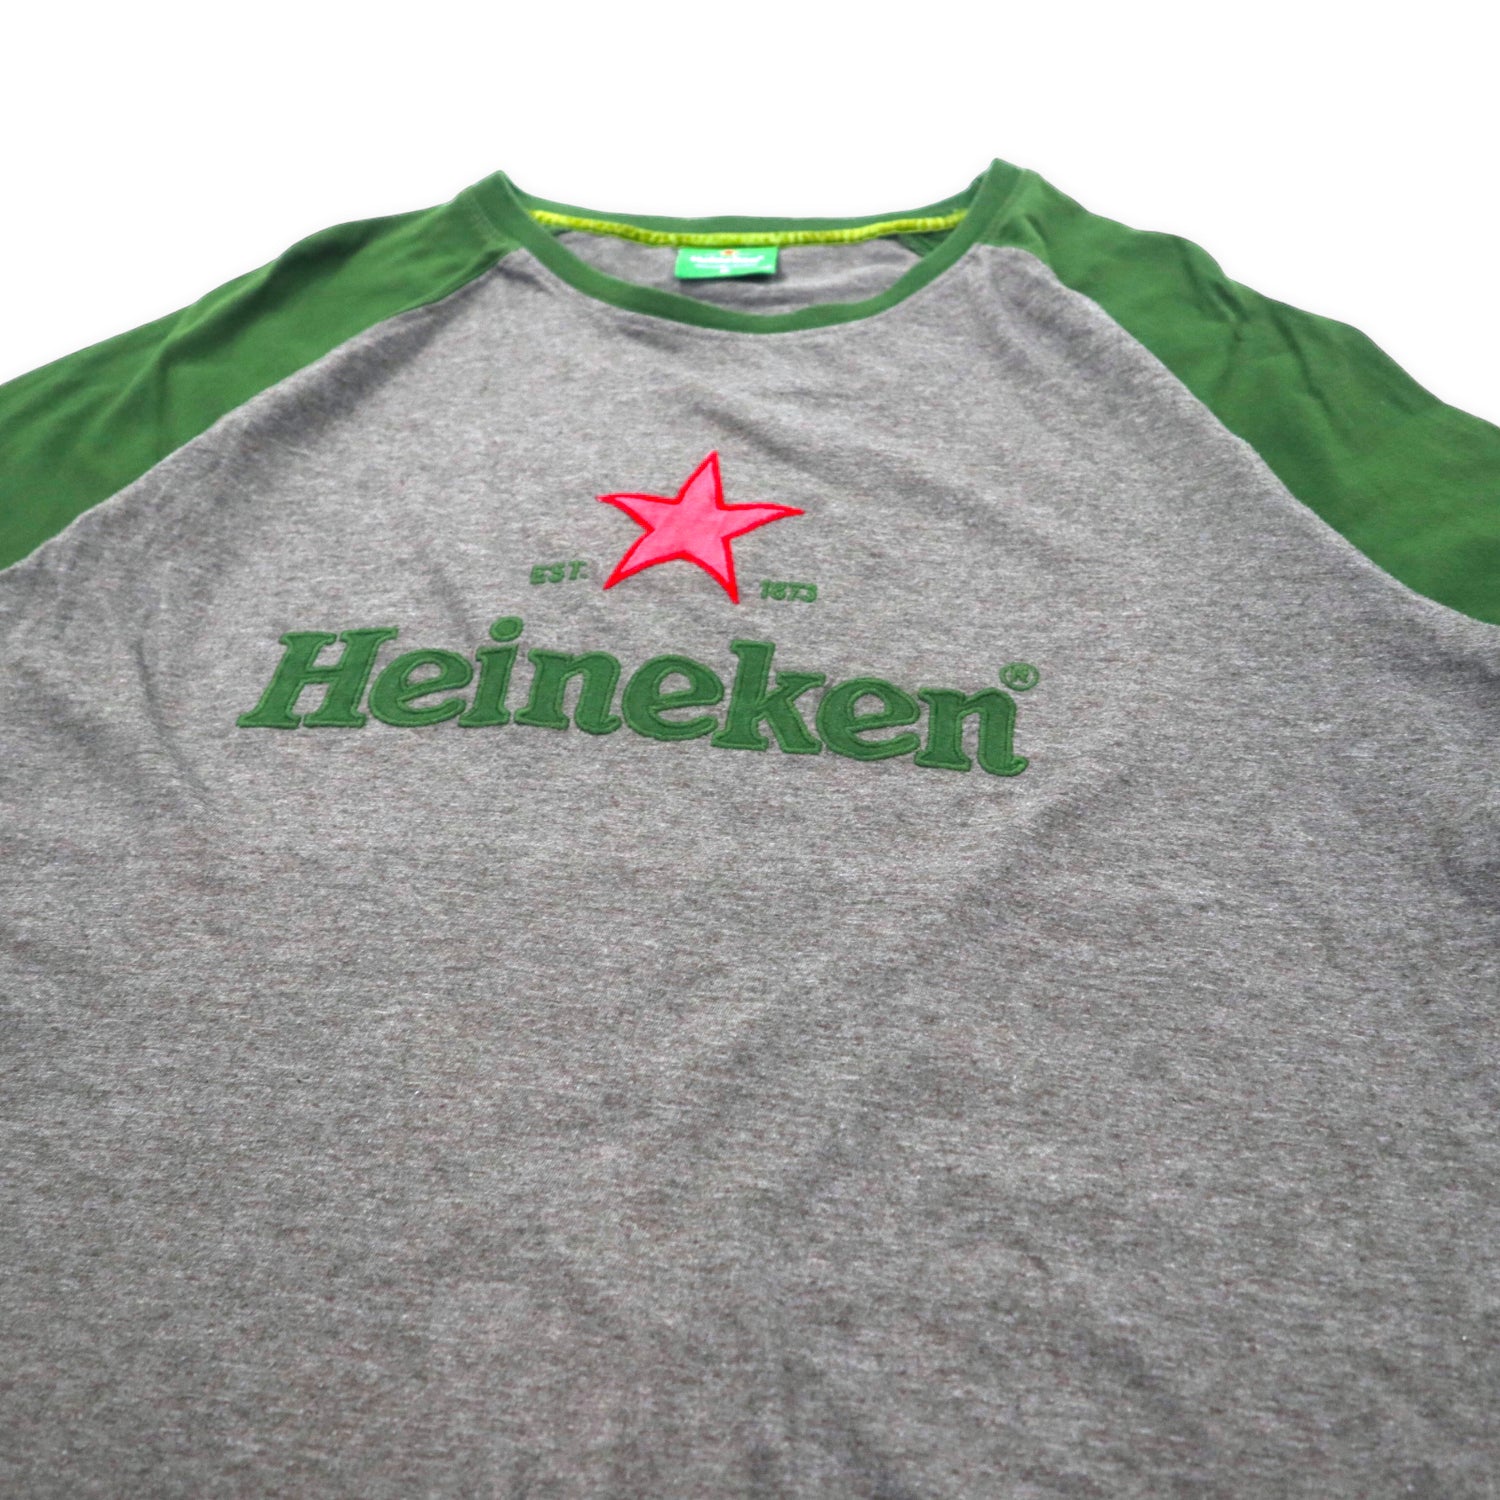 Heineken Raglan T-SHIRT XL Gray Green Cotton Logo Embroidery Big 